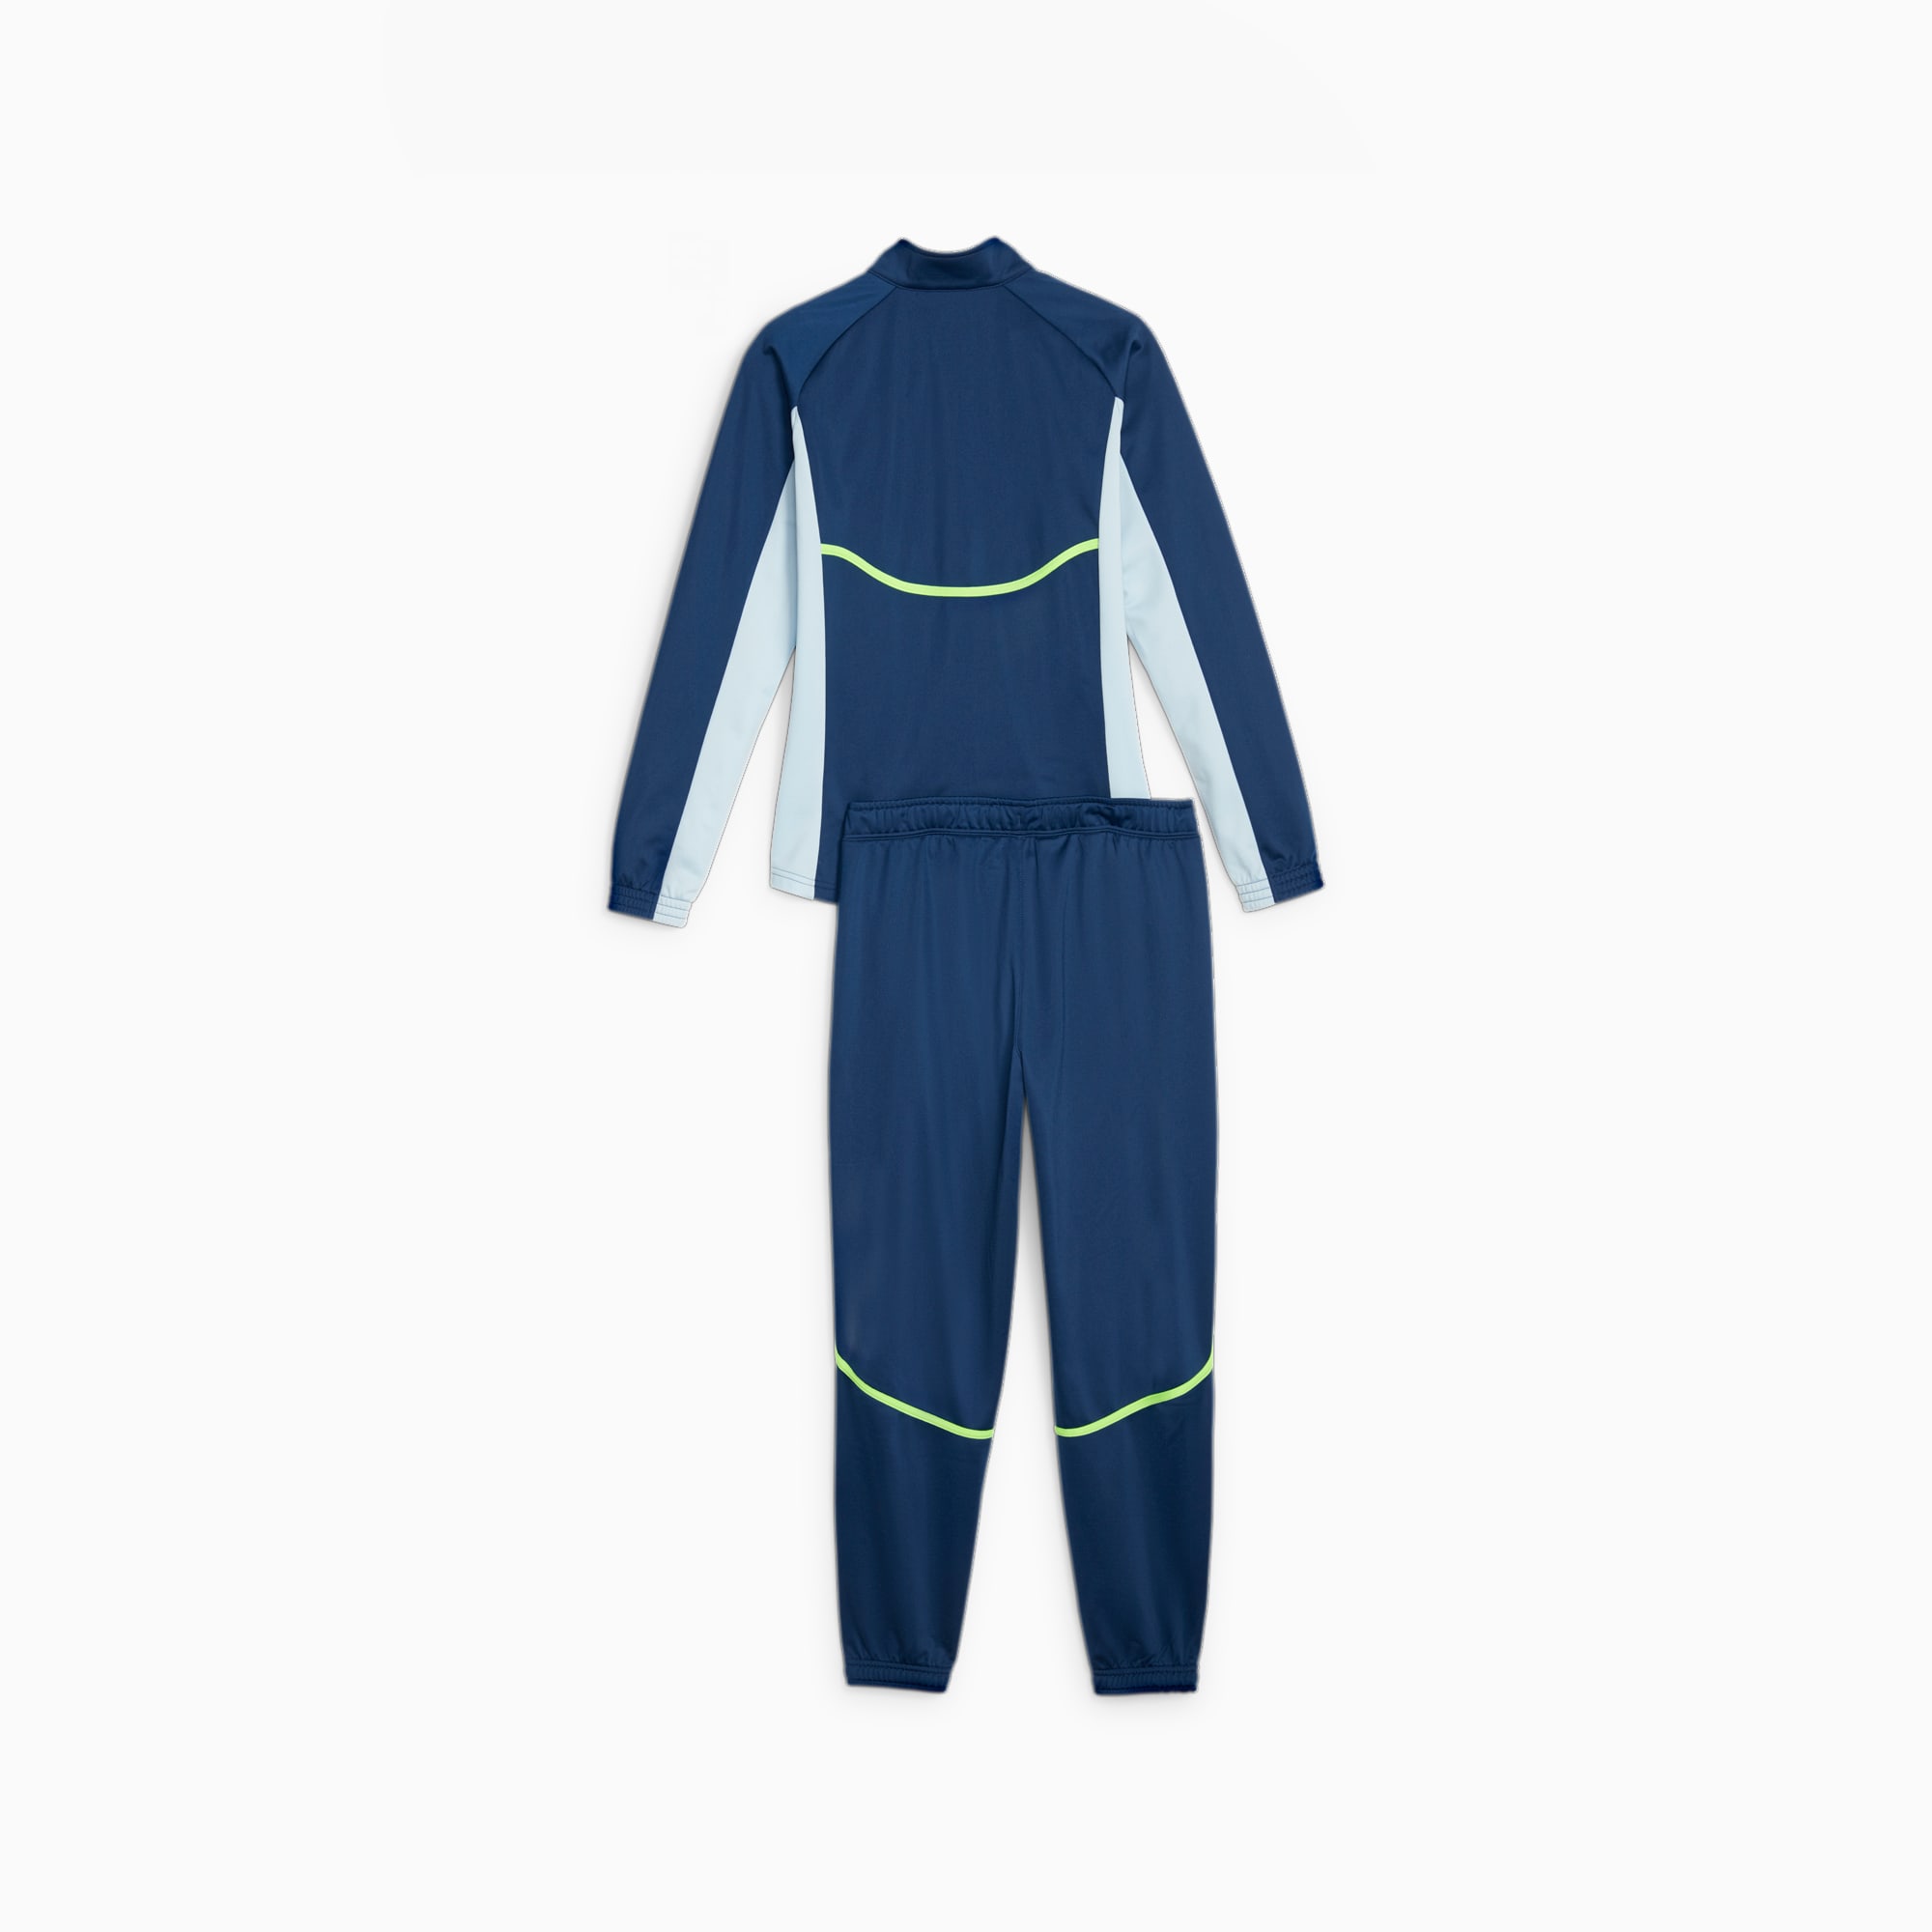 PUMA IndividualBLAZE Fußball Trainingsanzug, Blau/Silber, Größe: L, Kleidung